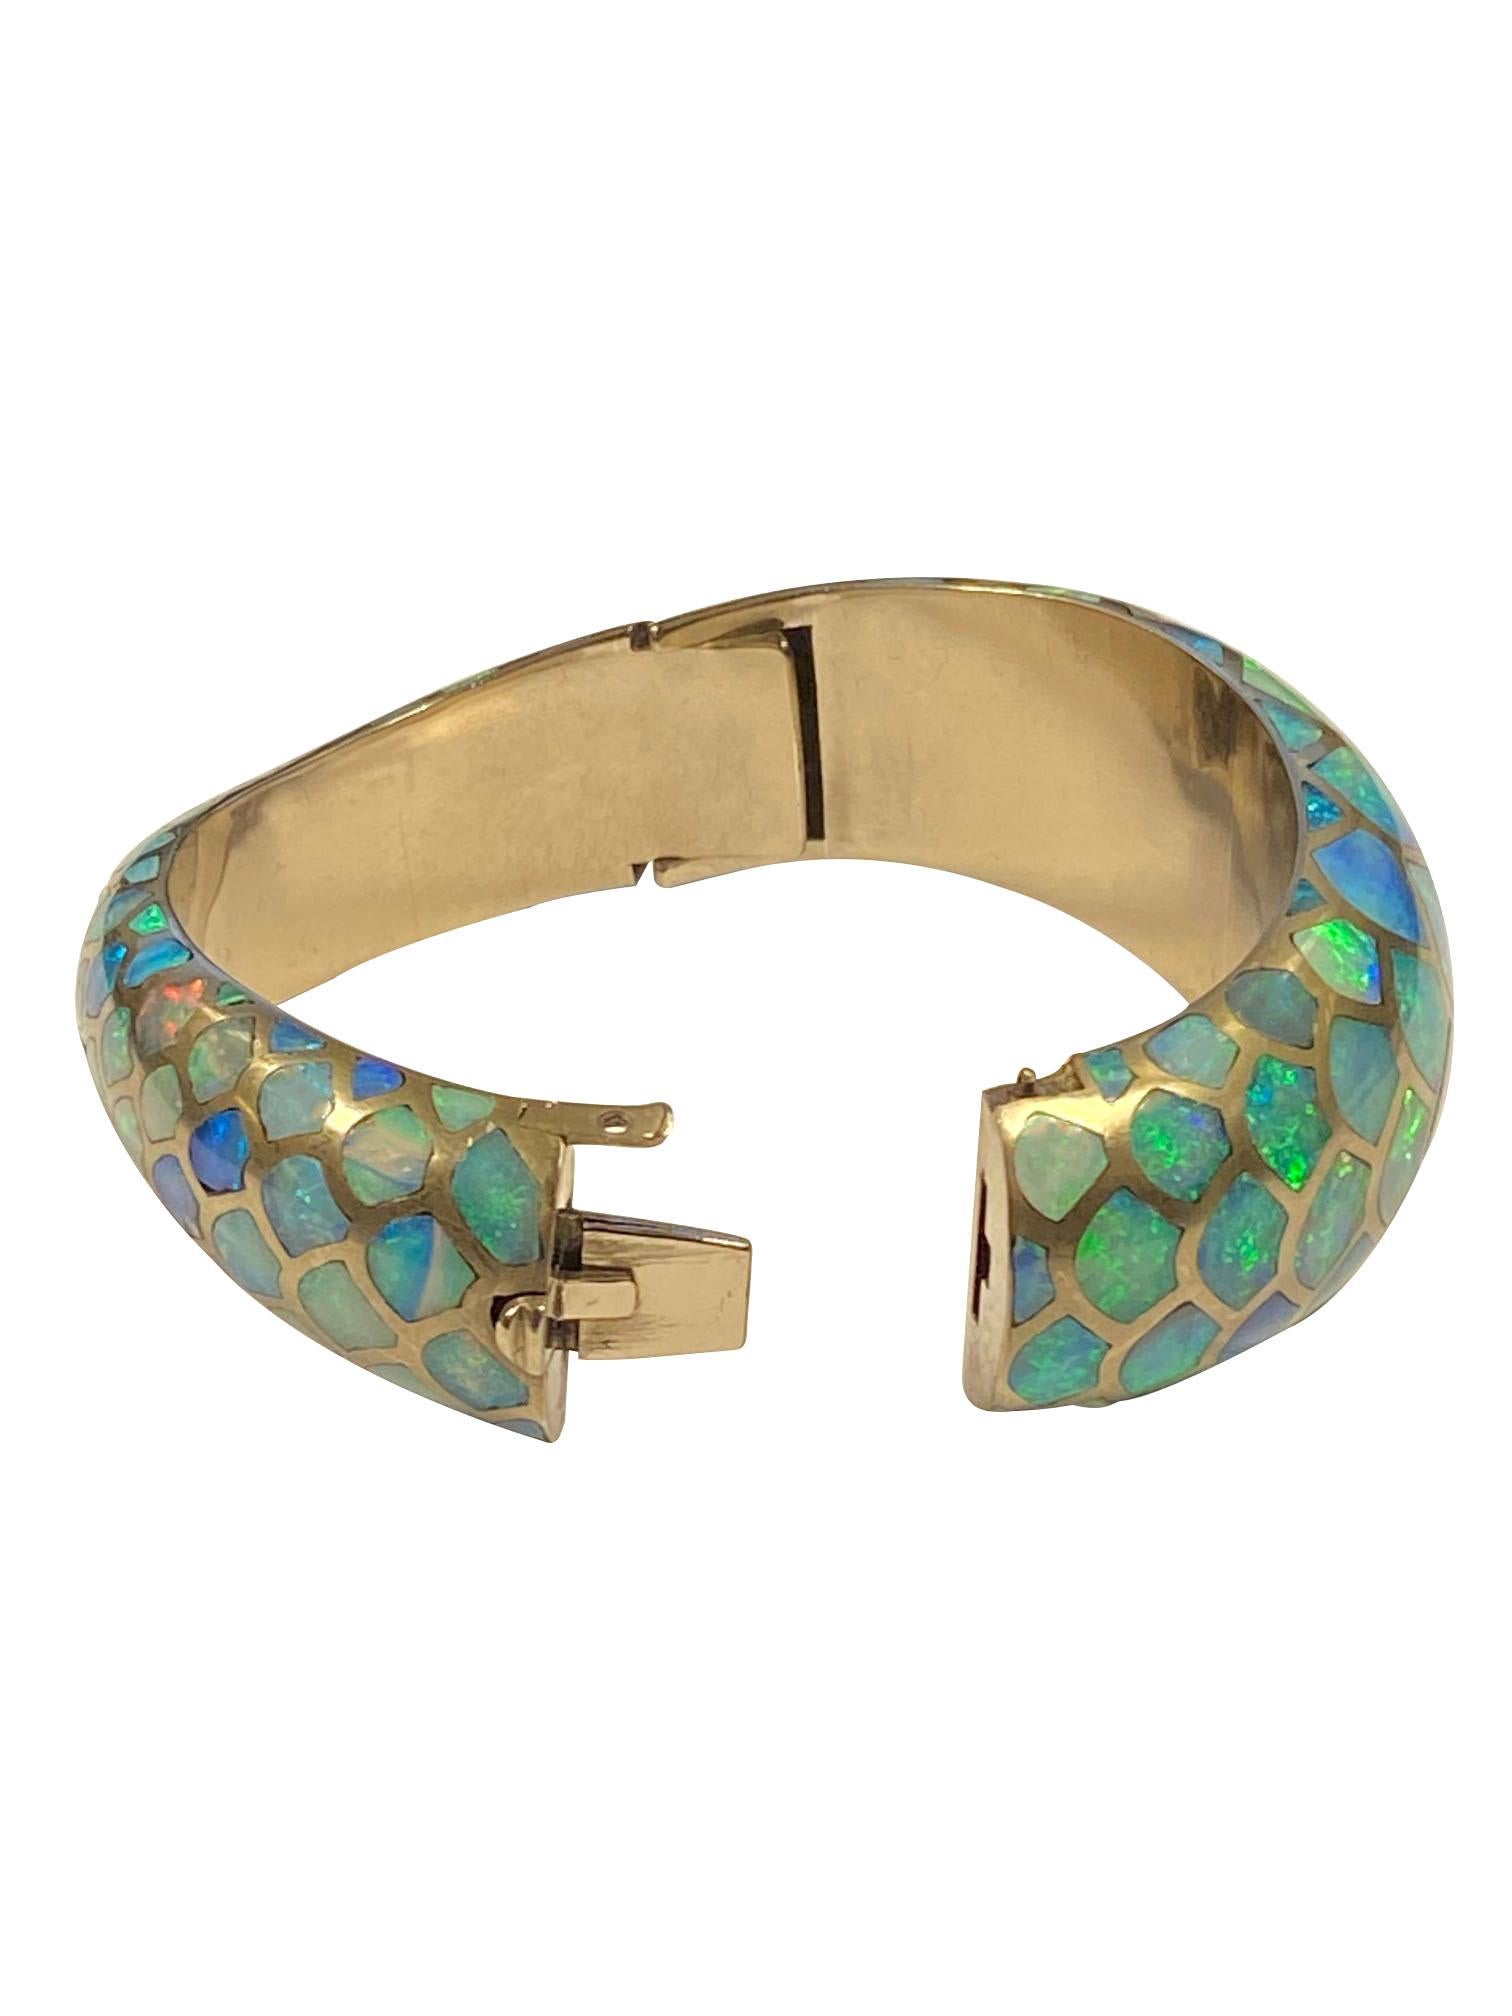 Angela Cummings White Gold and Opal Snakeskin Bangle Bracelet For Sale 2